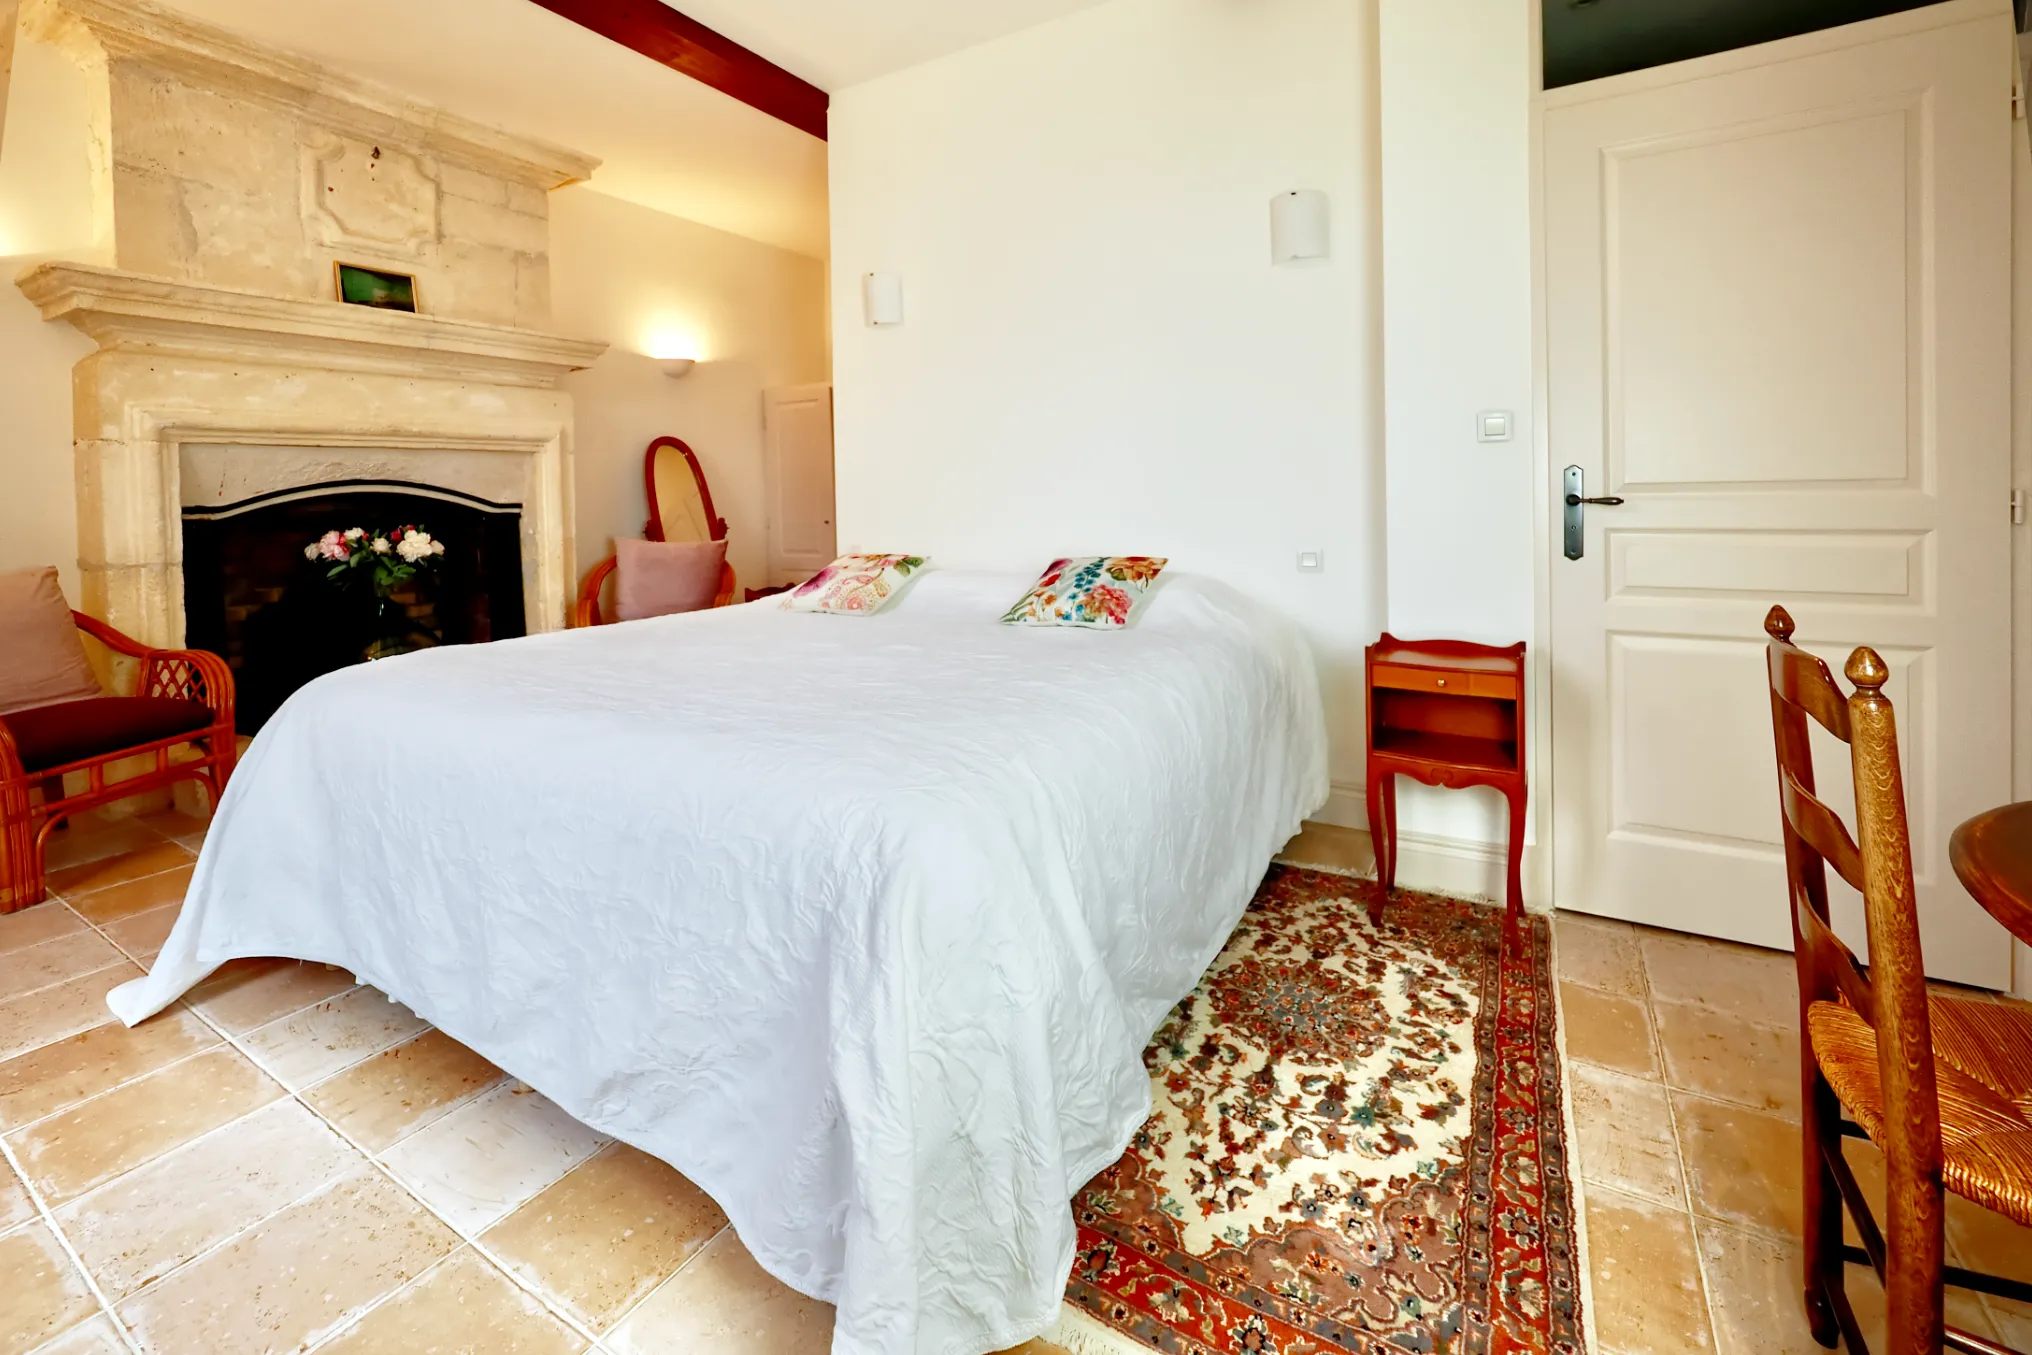 Iris Room Bed and Breakfast in Charente.